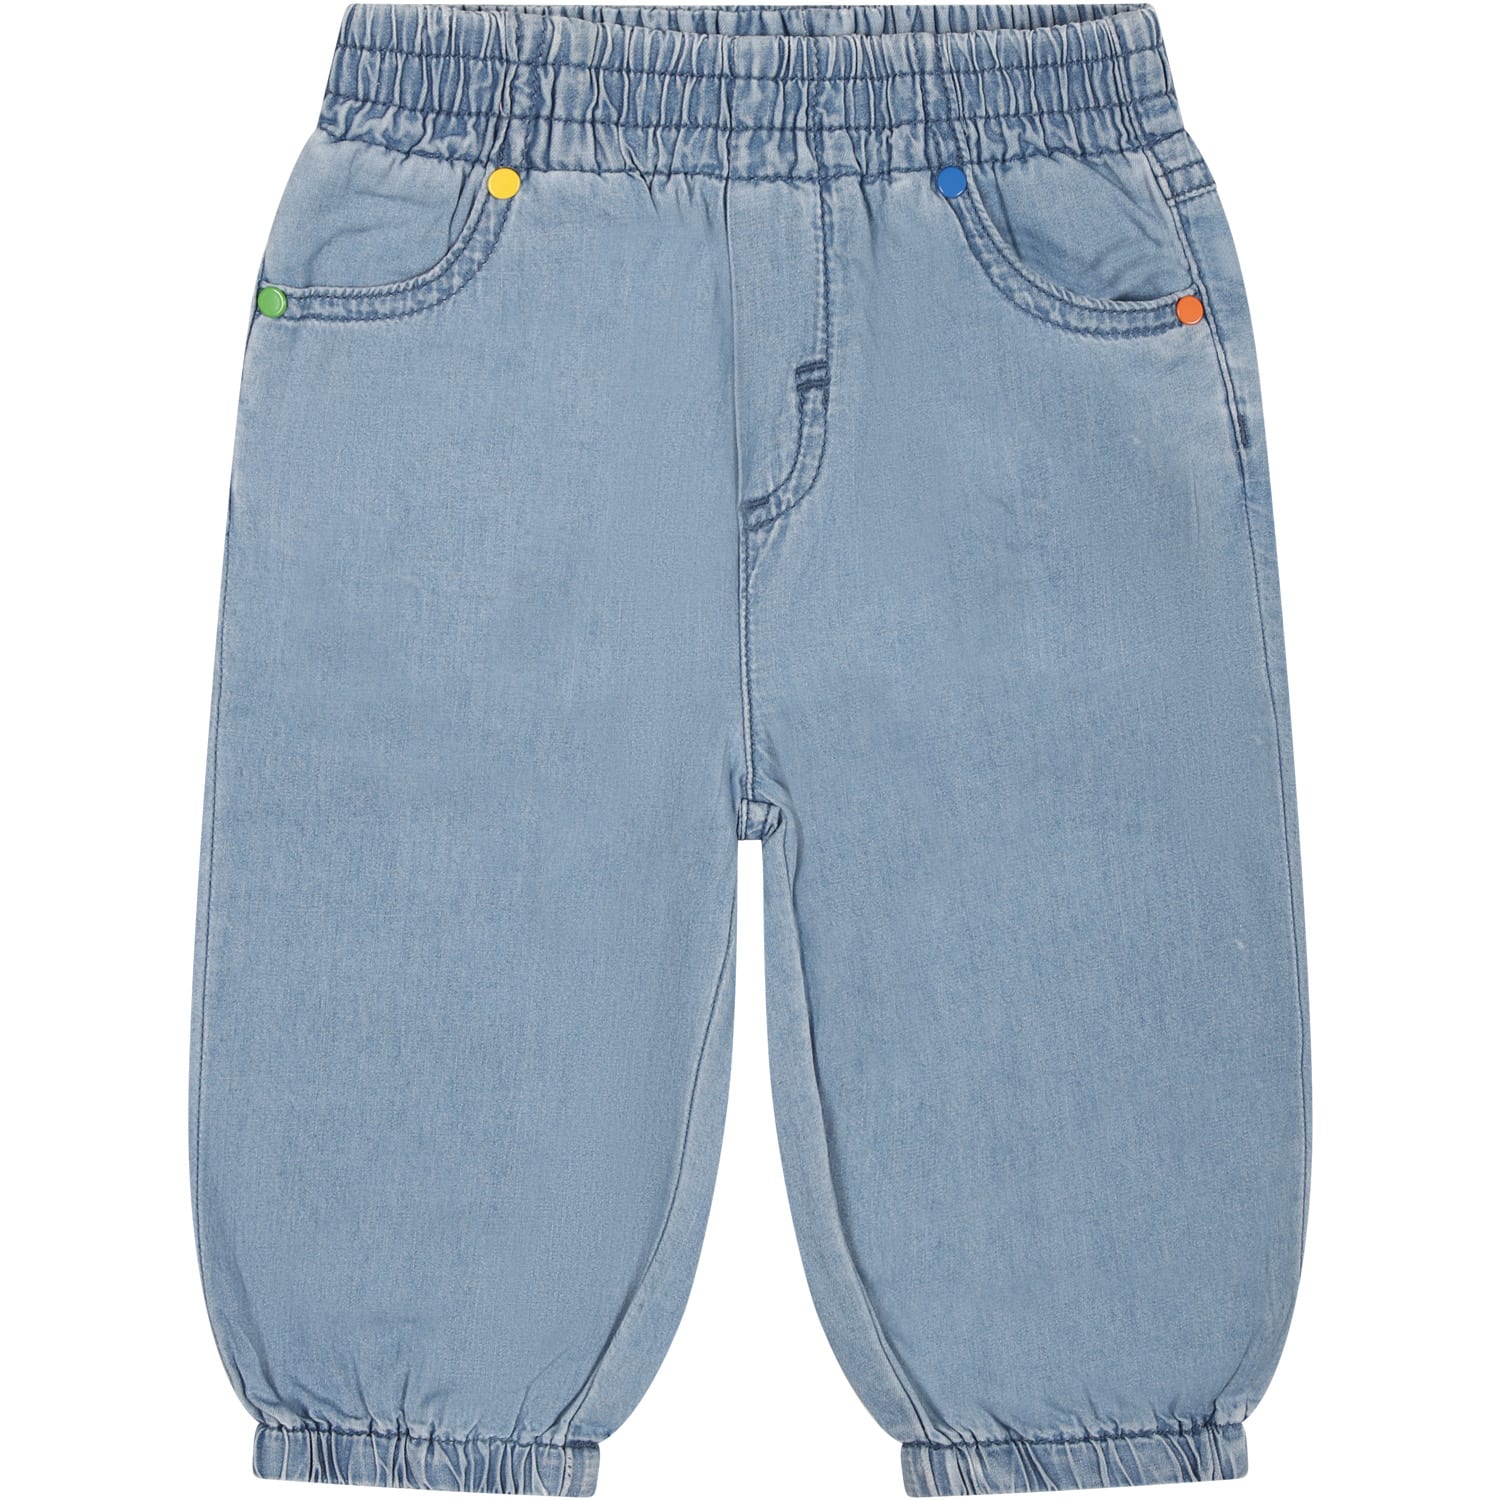 Shop Stella Mccartney Denim Jeans For Baby Boy With Multicolor Sun